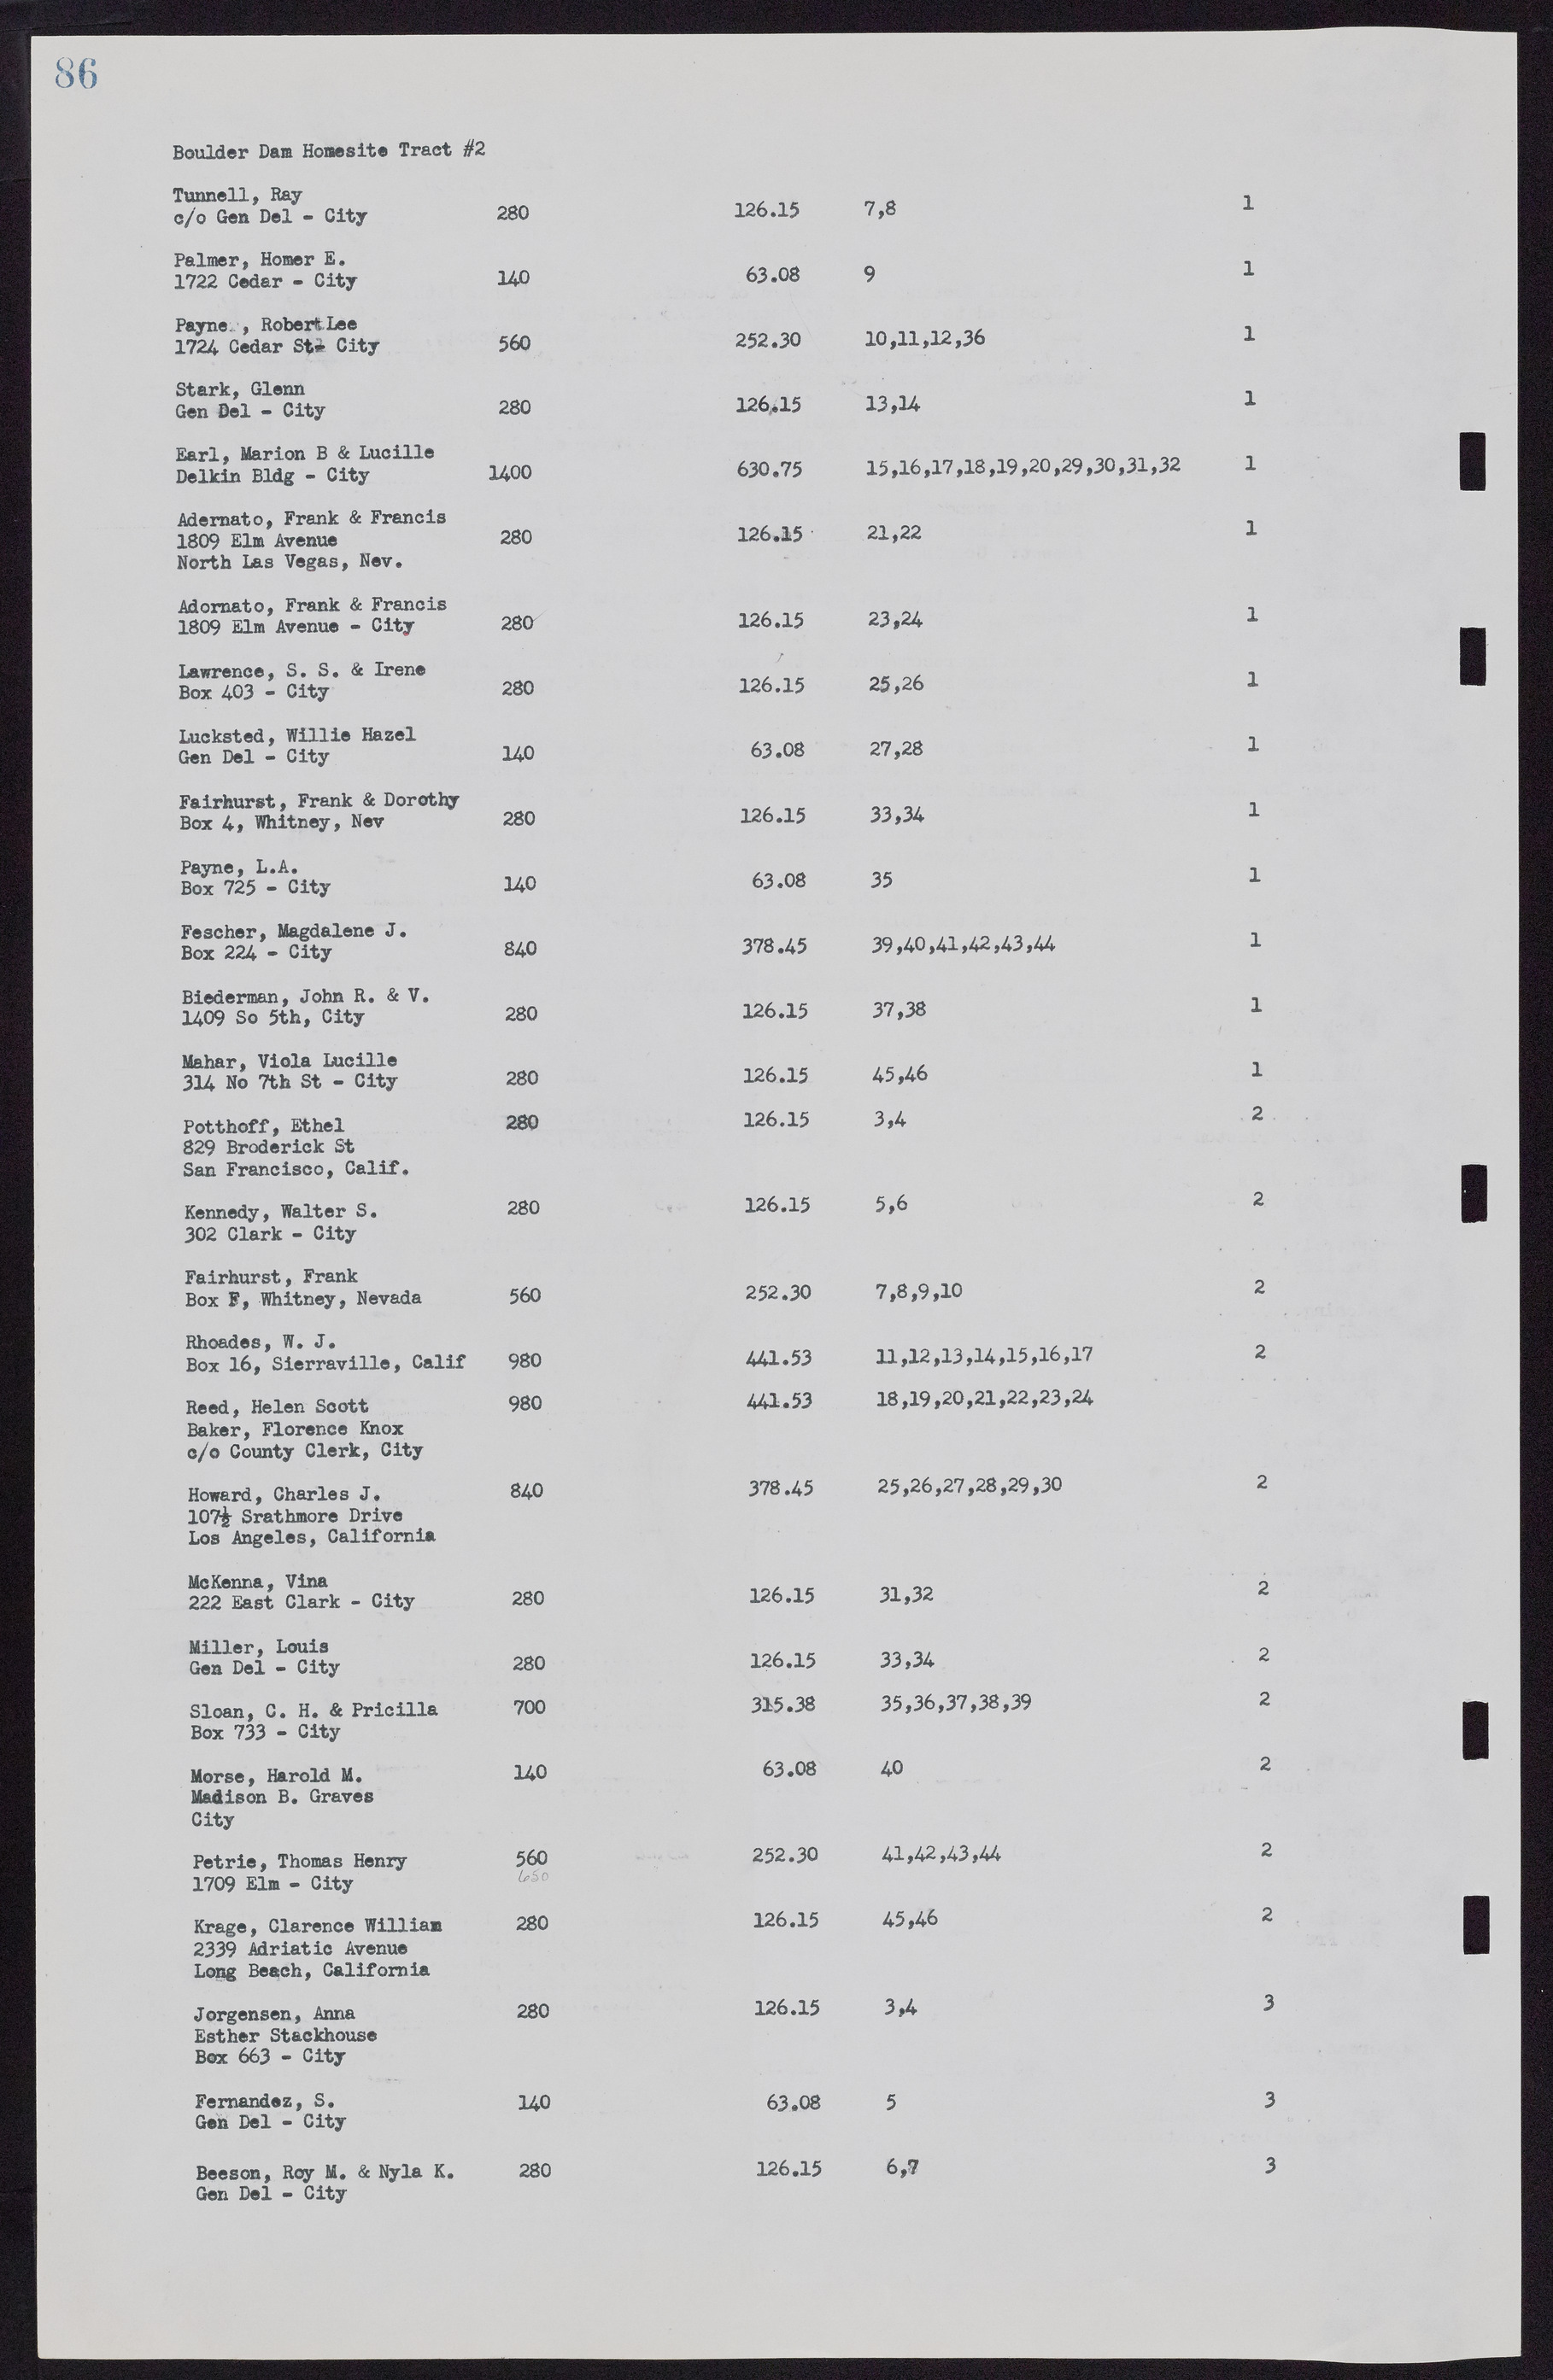 Las Vegas City Commission Minutes, November 7, 1949 to May 21, 1952, lvc000007-94